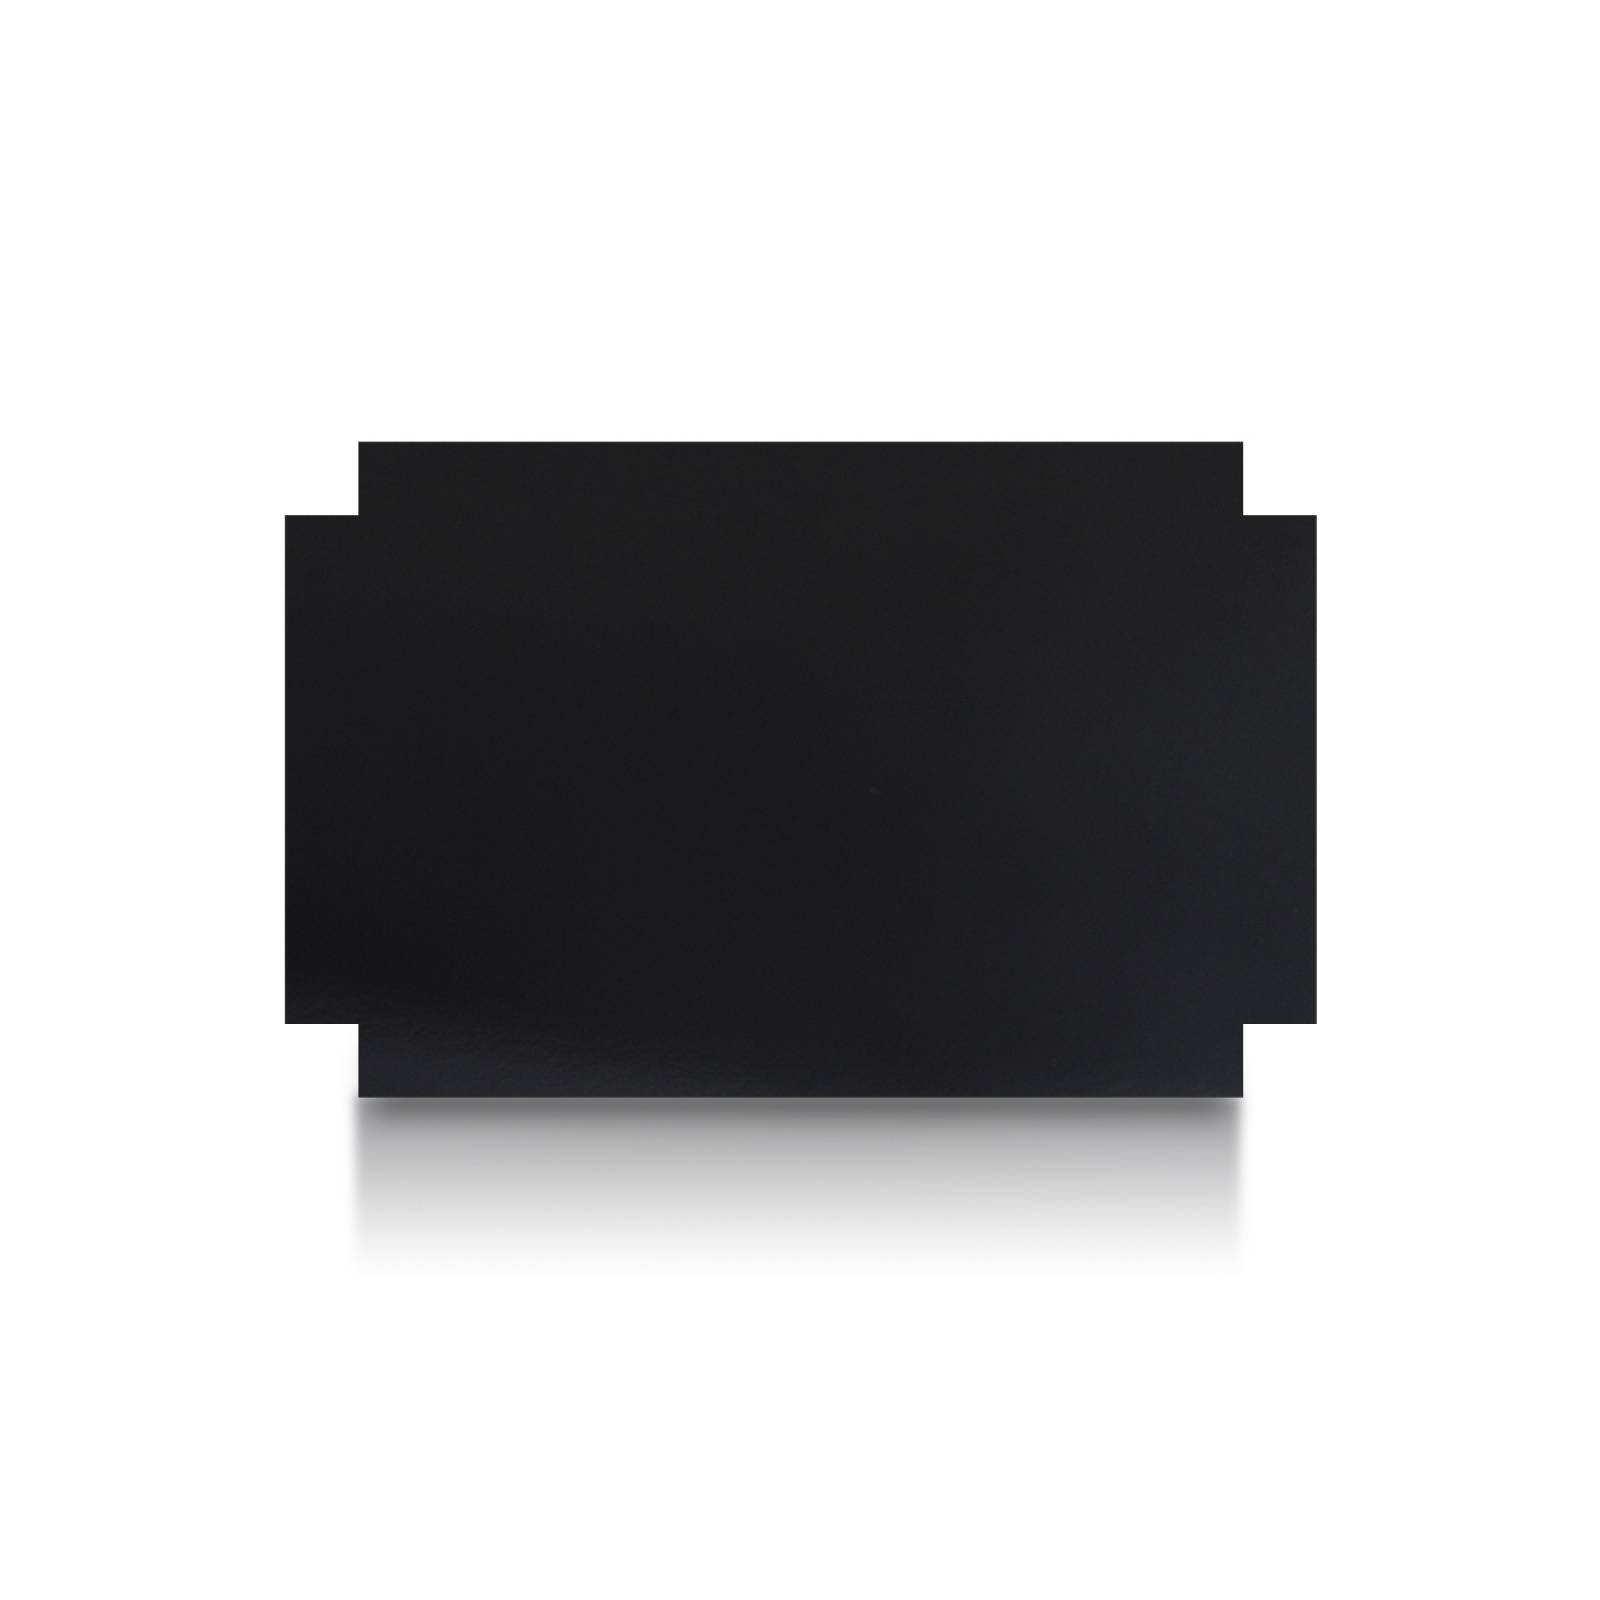 Aislante Cerámico Protector Térmico para Pared de 55 x 35 cm Negro, Mod: 5PTPNe